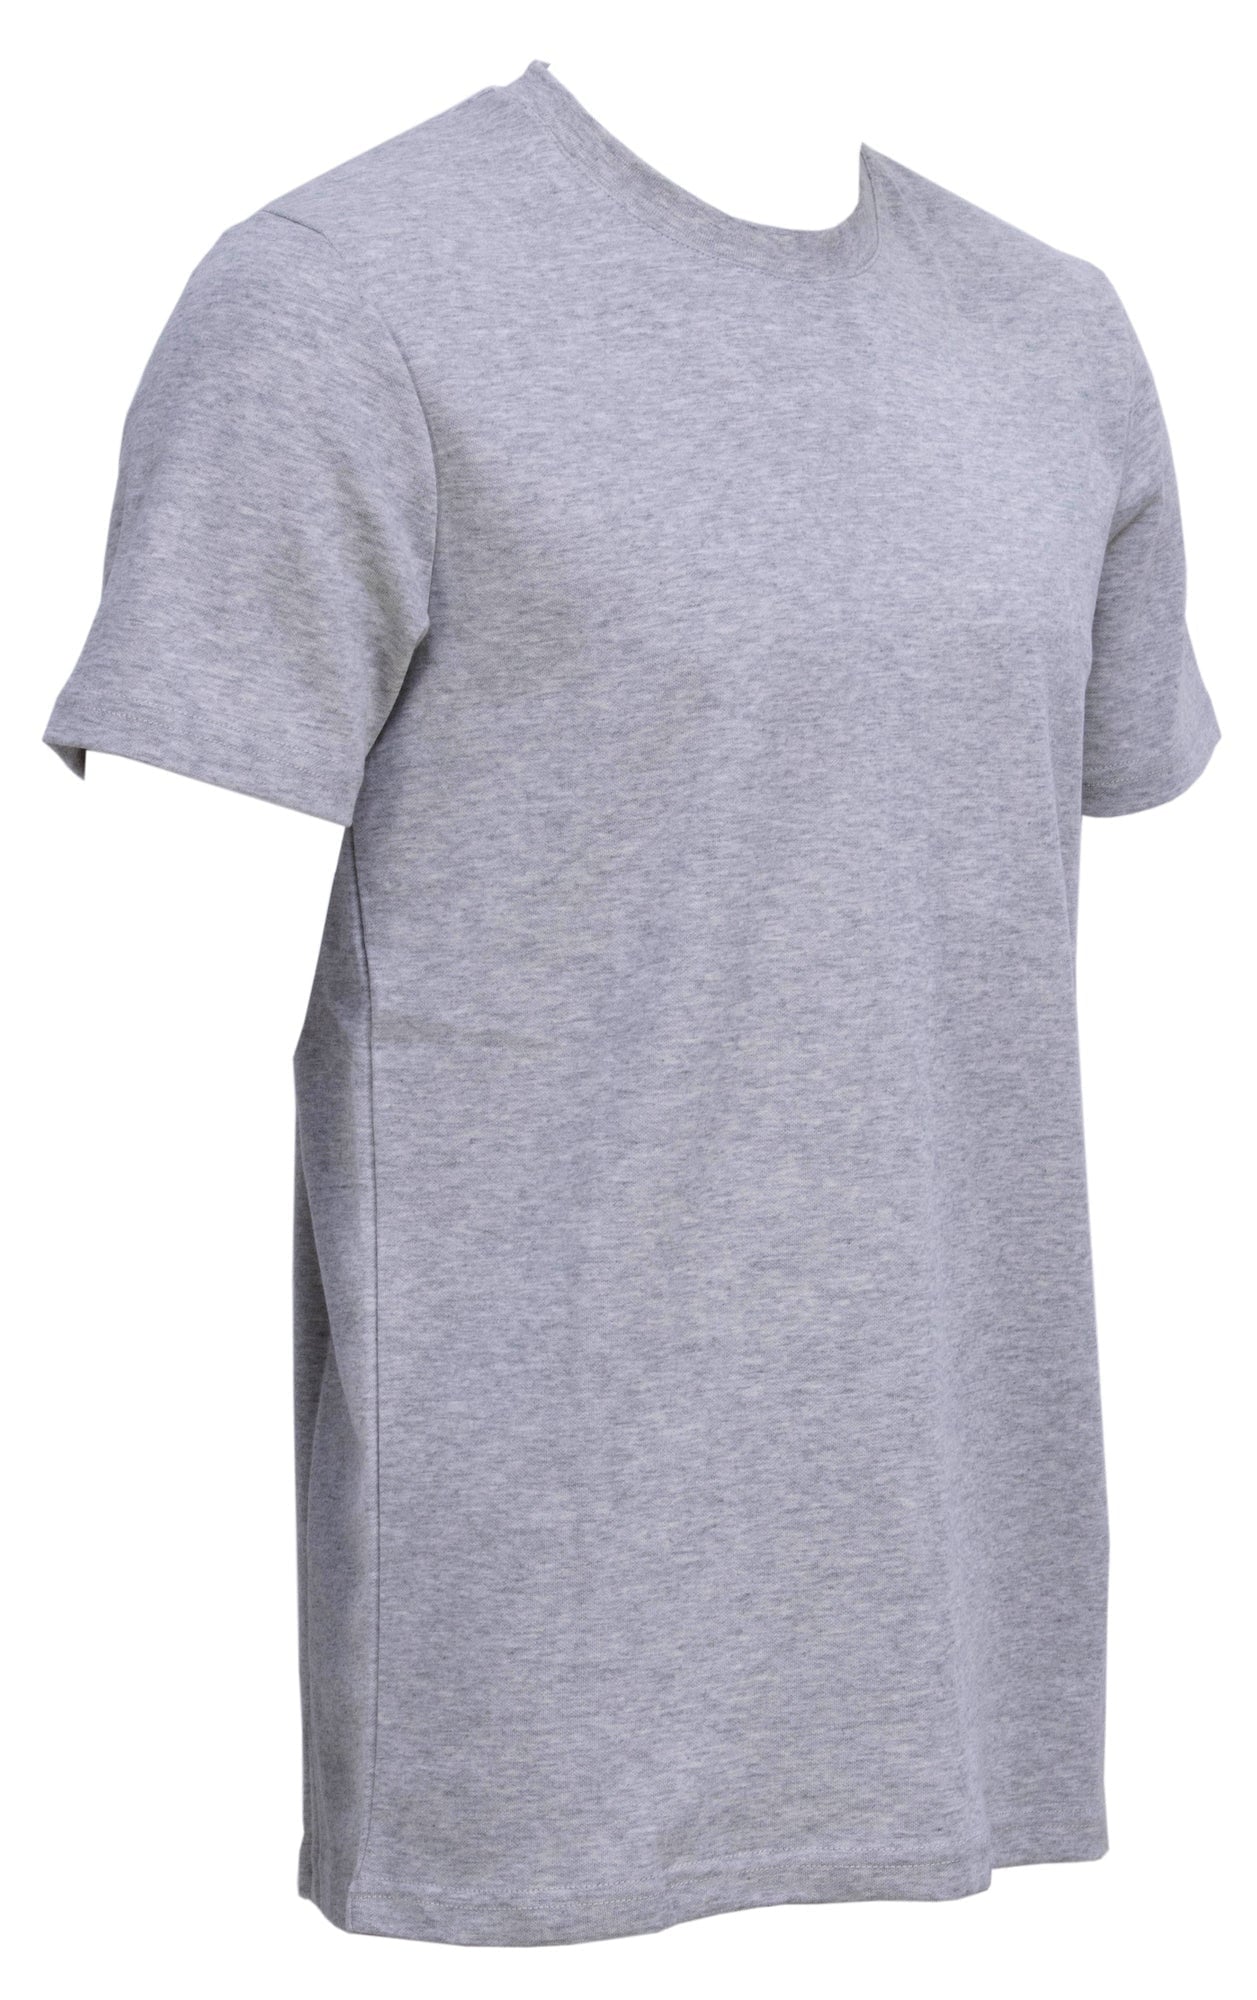 Best EMF Protection T-Shirts  Men's EMF Protective T-Shirt – Hooga